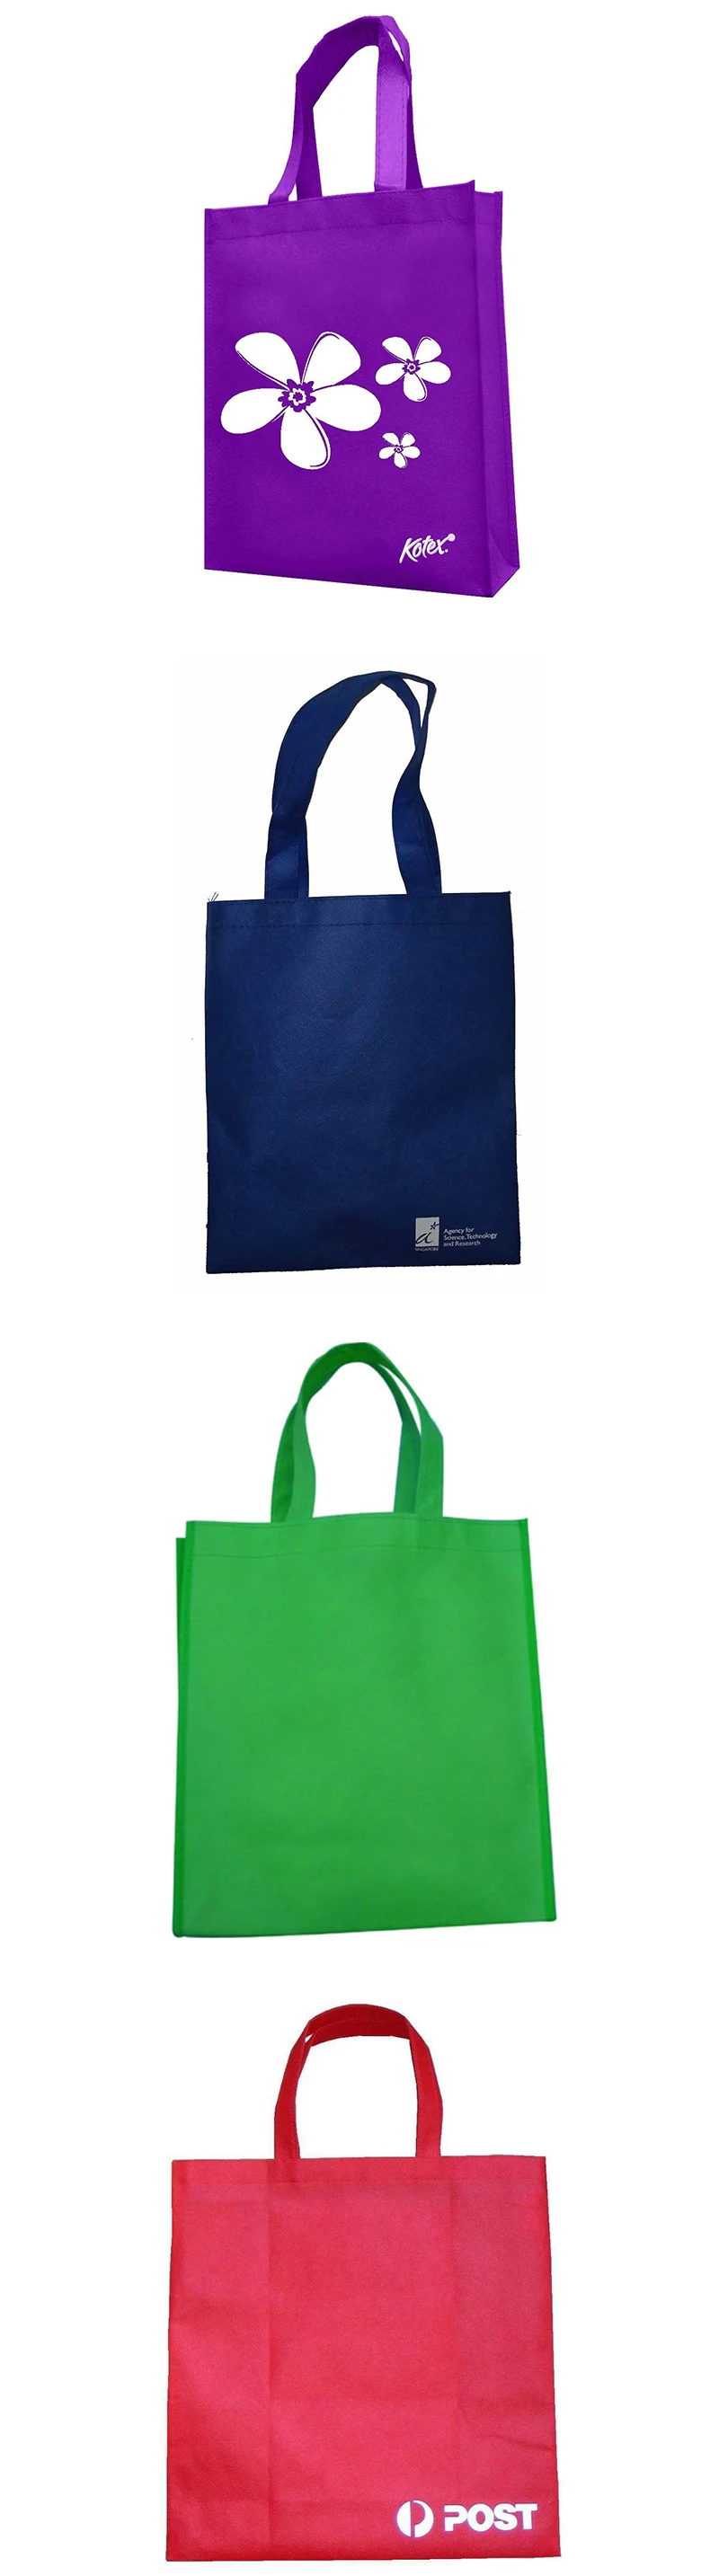 Promo Reusable Bag / Reusable Shopping Bag / Reusable Tote Bag